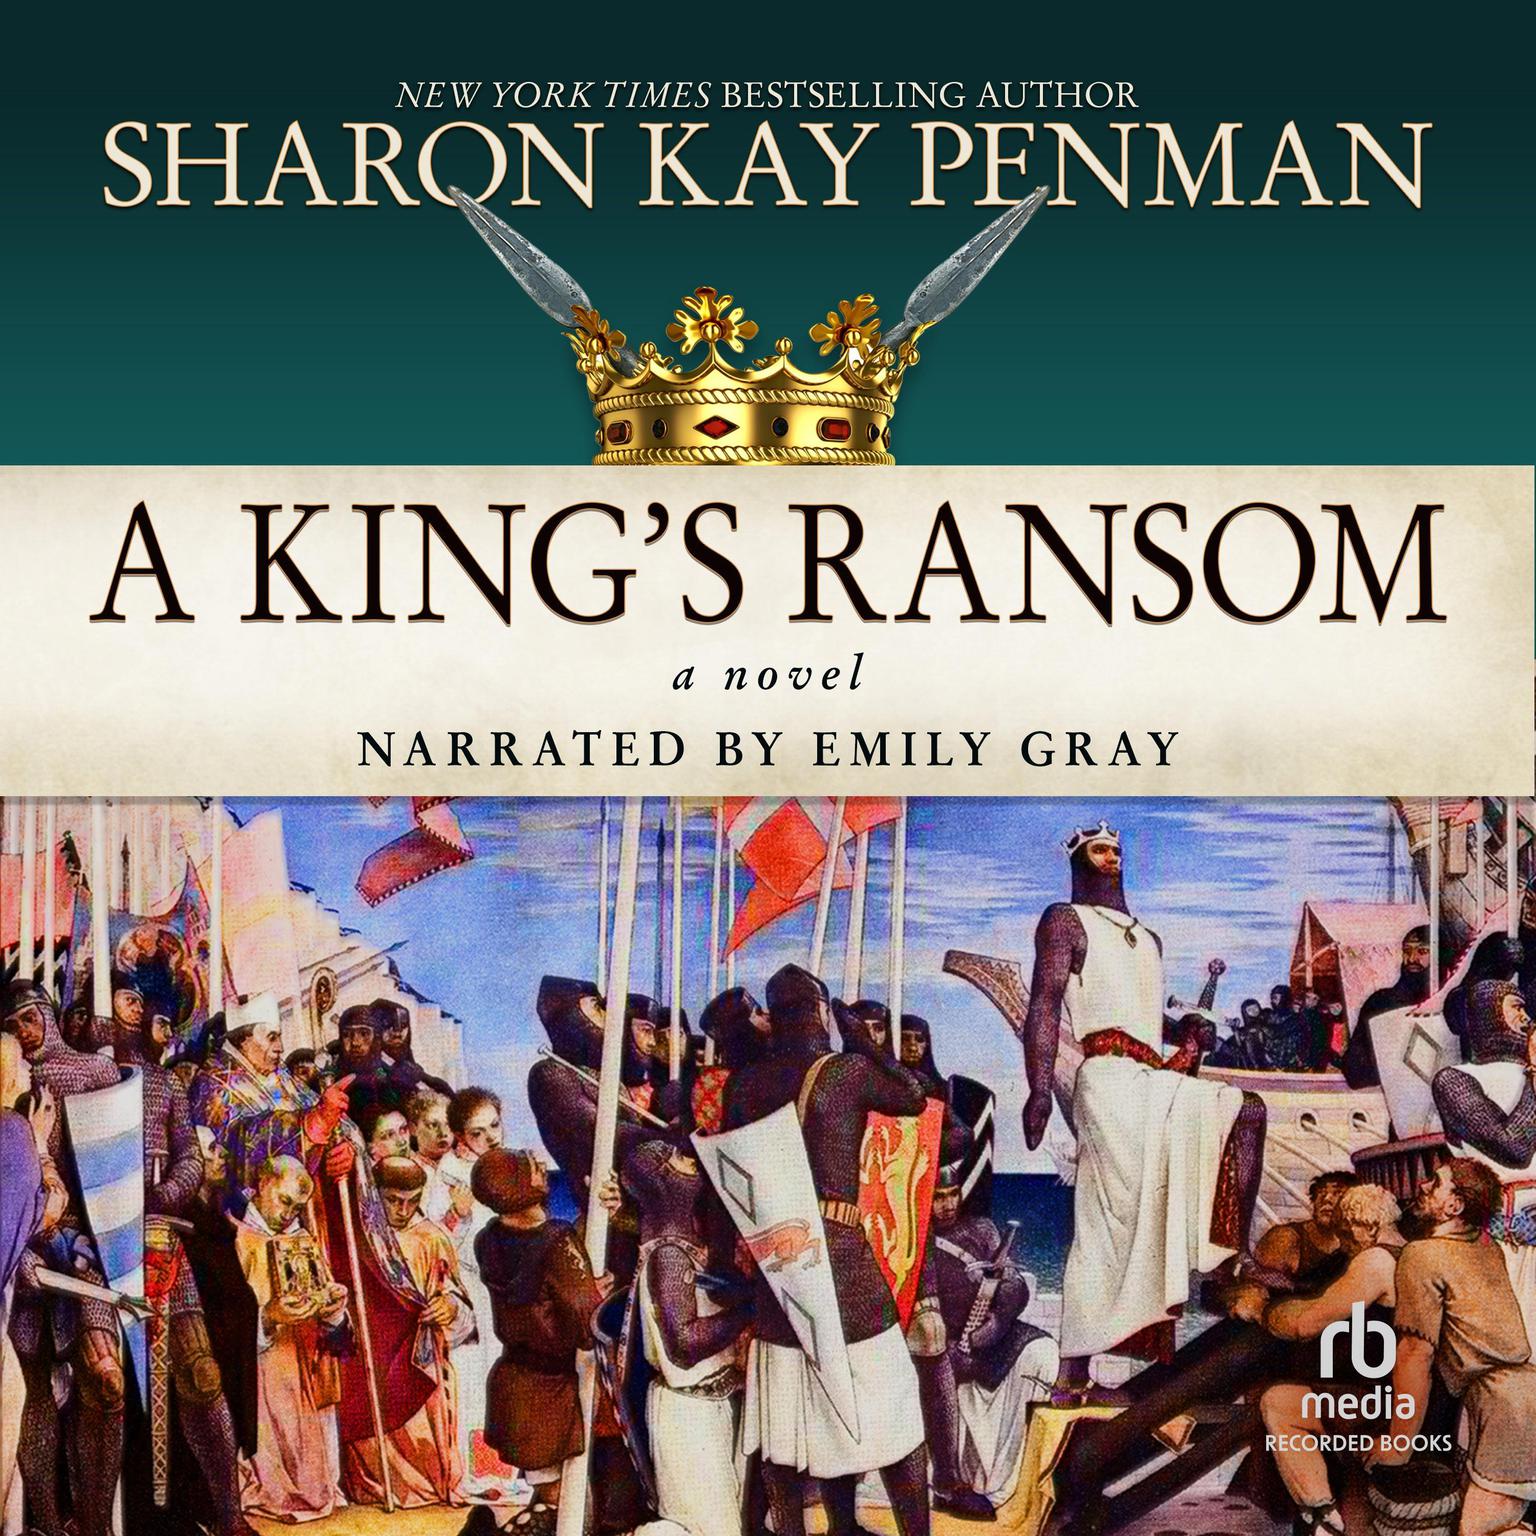 A Kings Ransom Audiobook, by Sharon Kay Penman